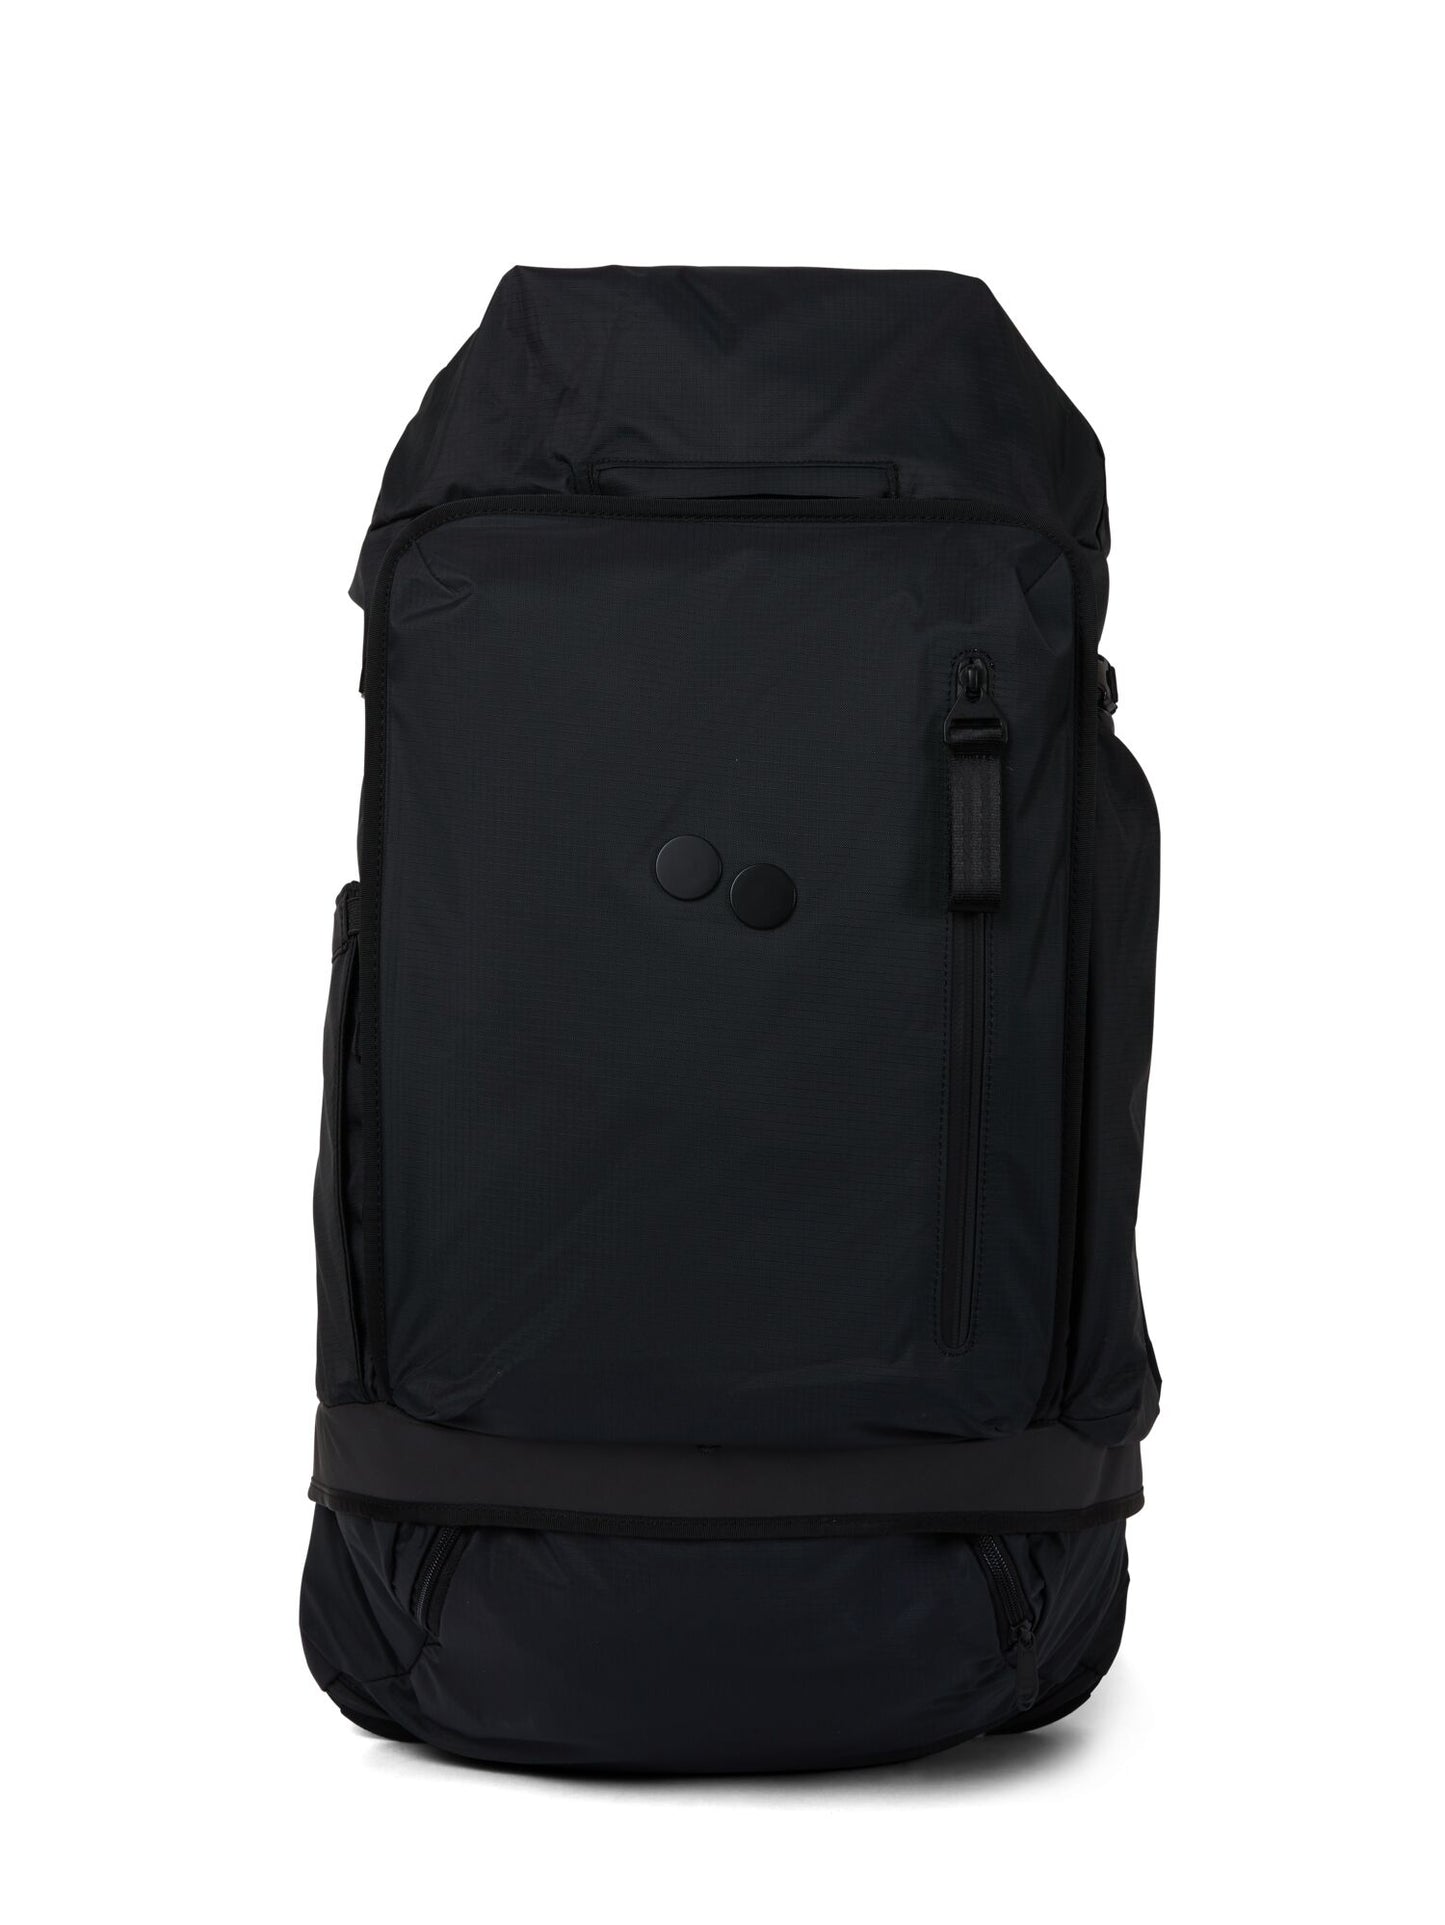 pinqponq-backpack-komut-large-pure-black-front